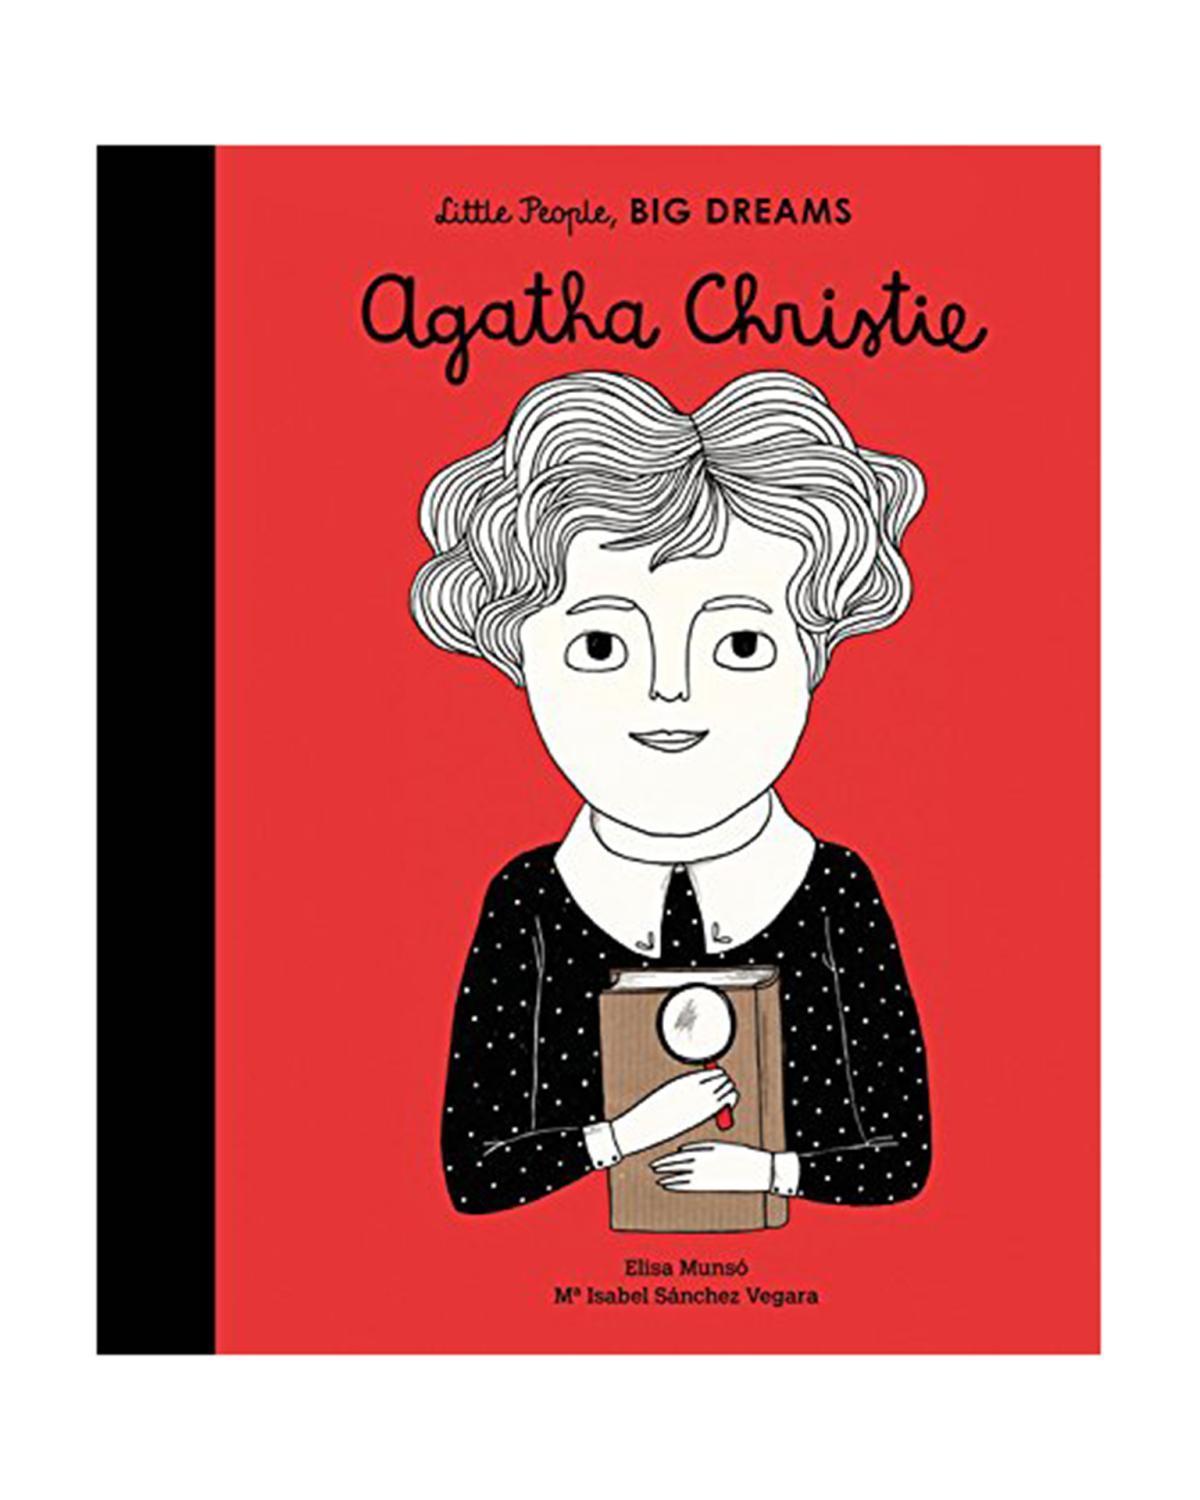 Little quarto publishing group play little people, big dreams: agatha christie